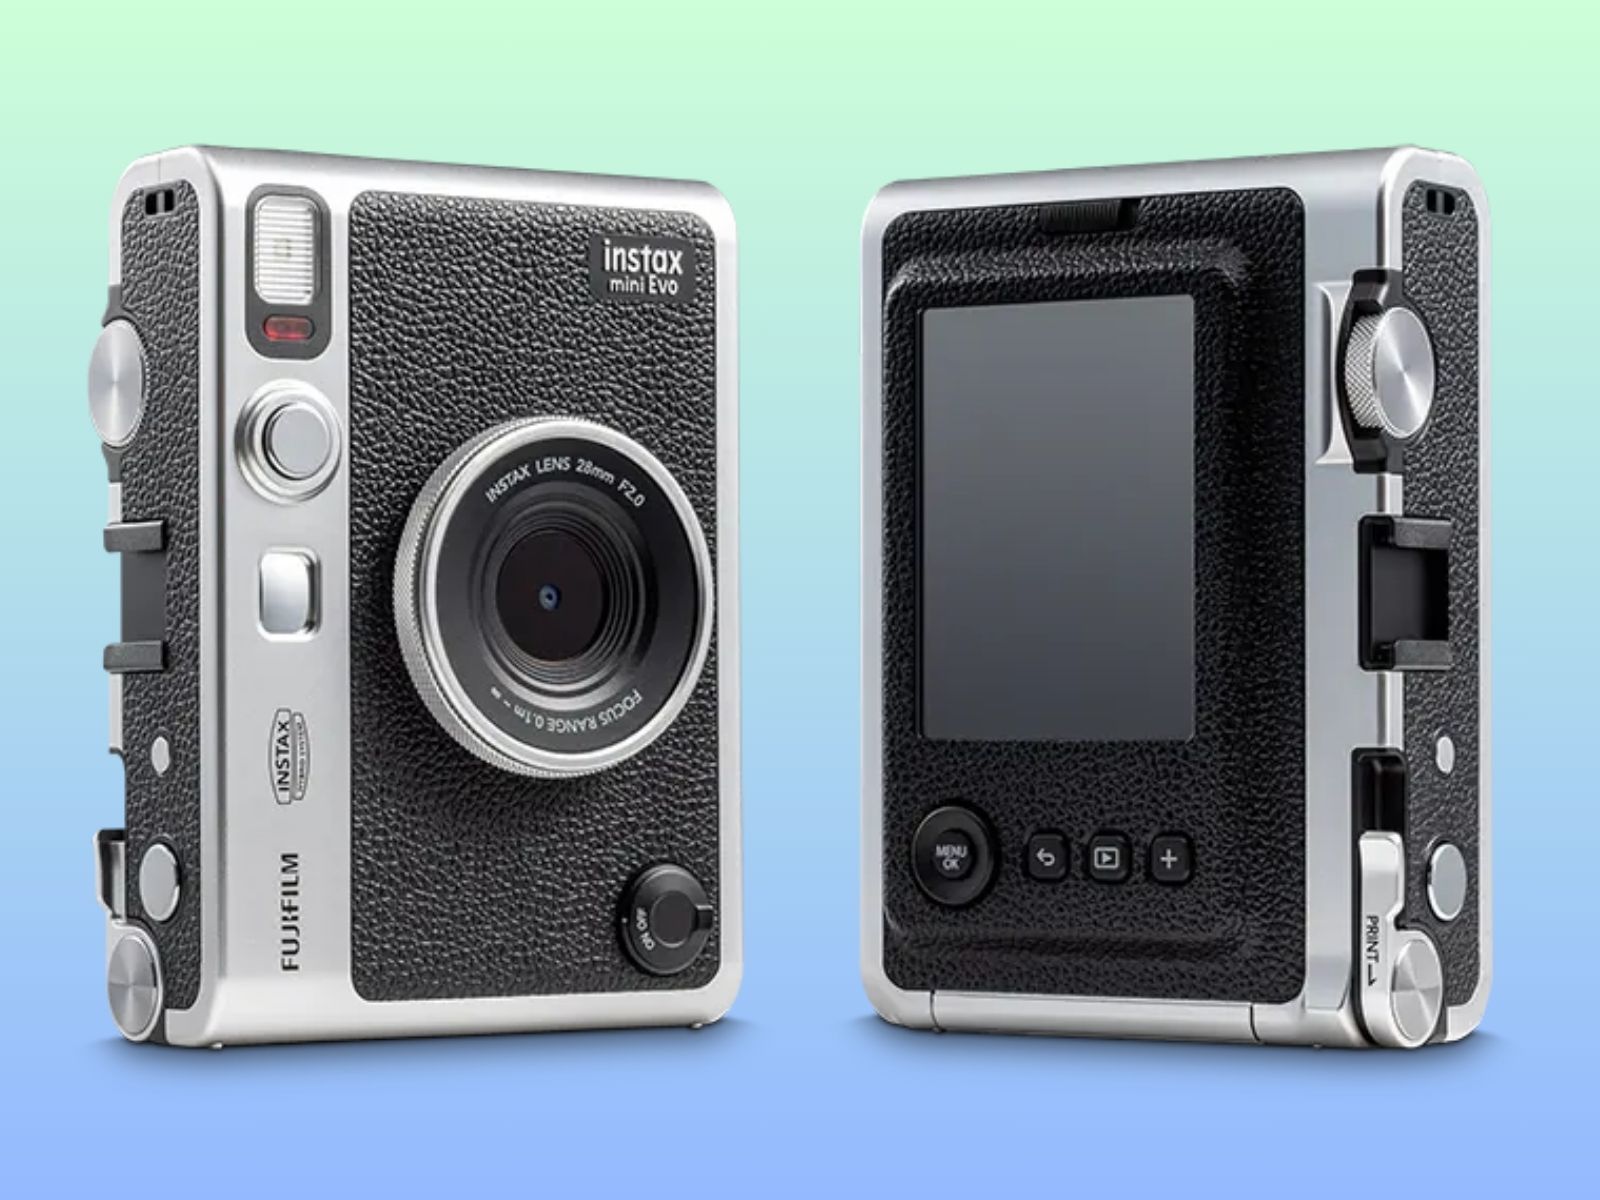 Fujifilm Instax Mini Evo Vs Instax Mini Li Play: Detailed Side by